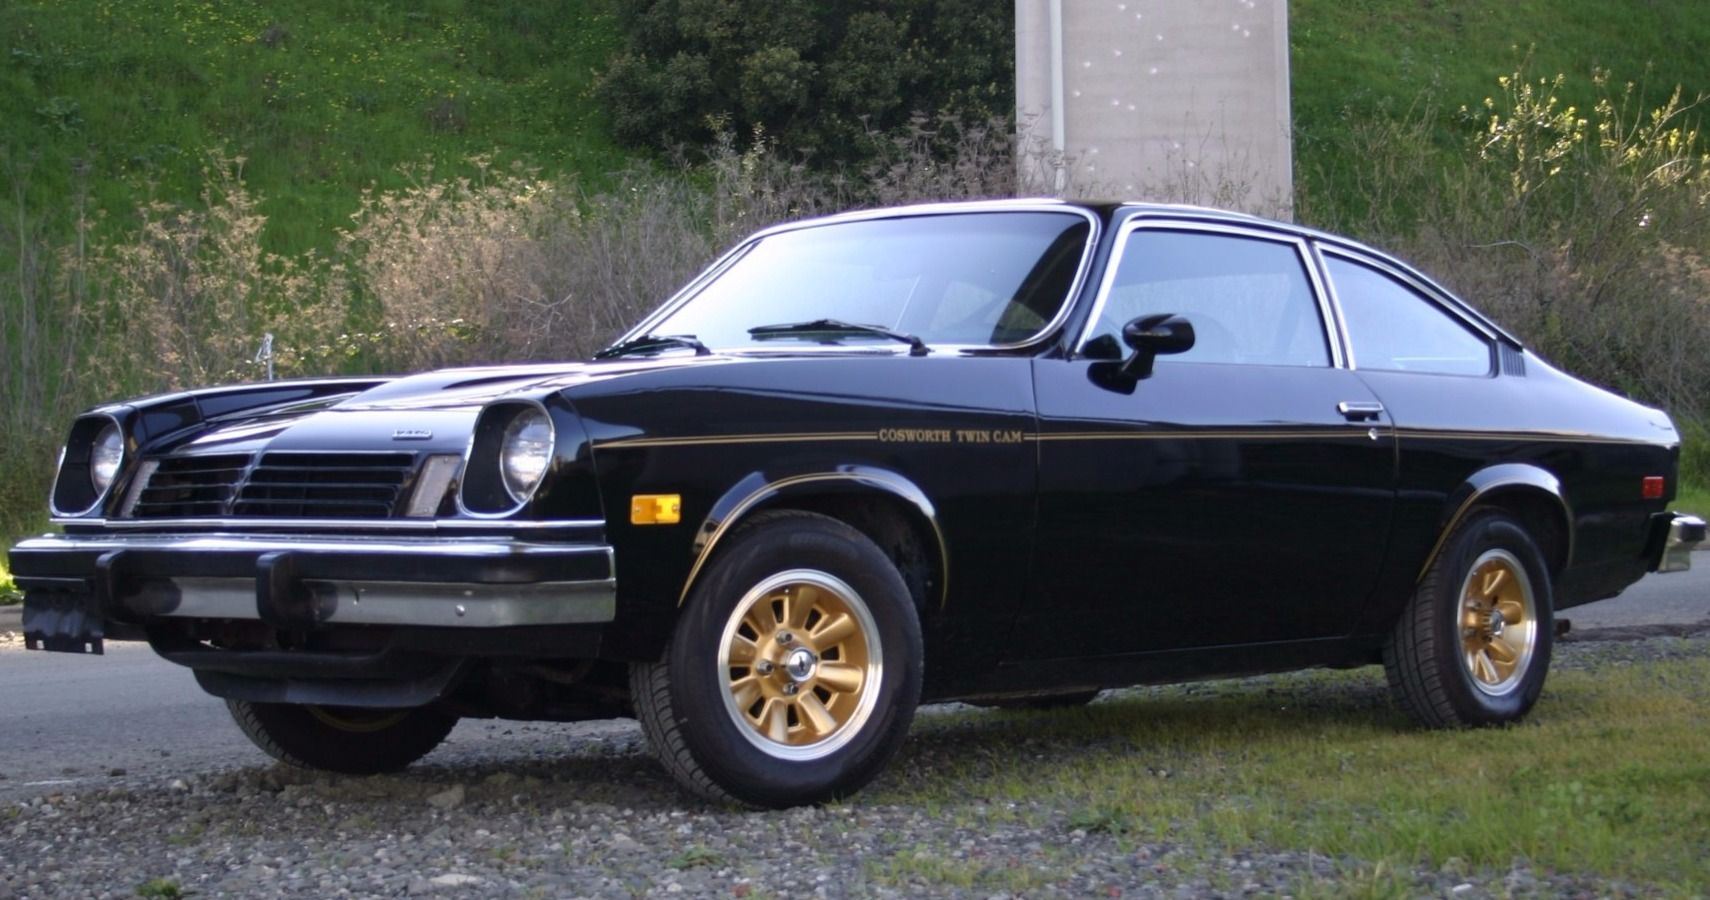 A black 1975 Chevrolet Vega Cosworth parked